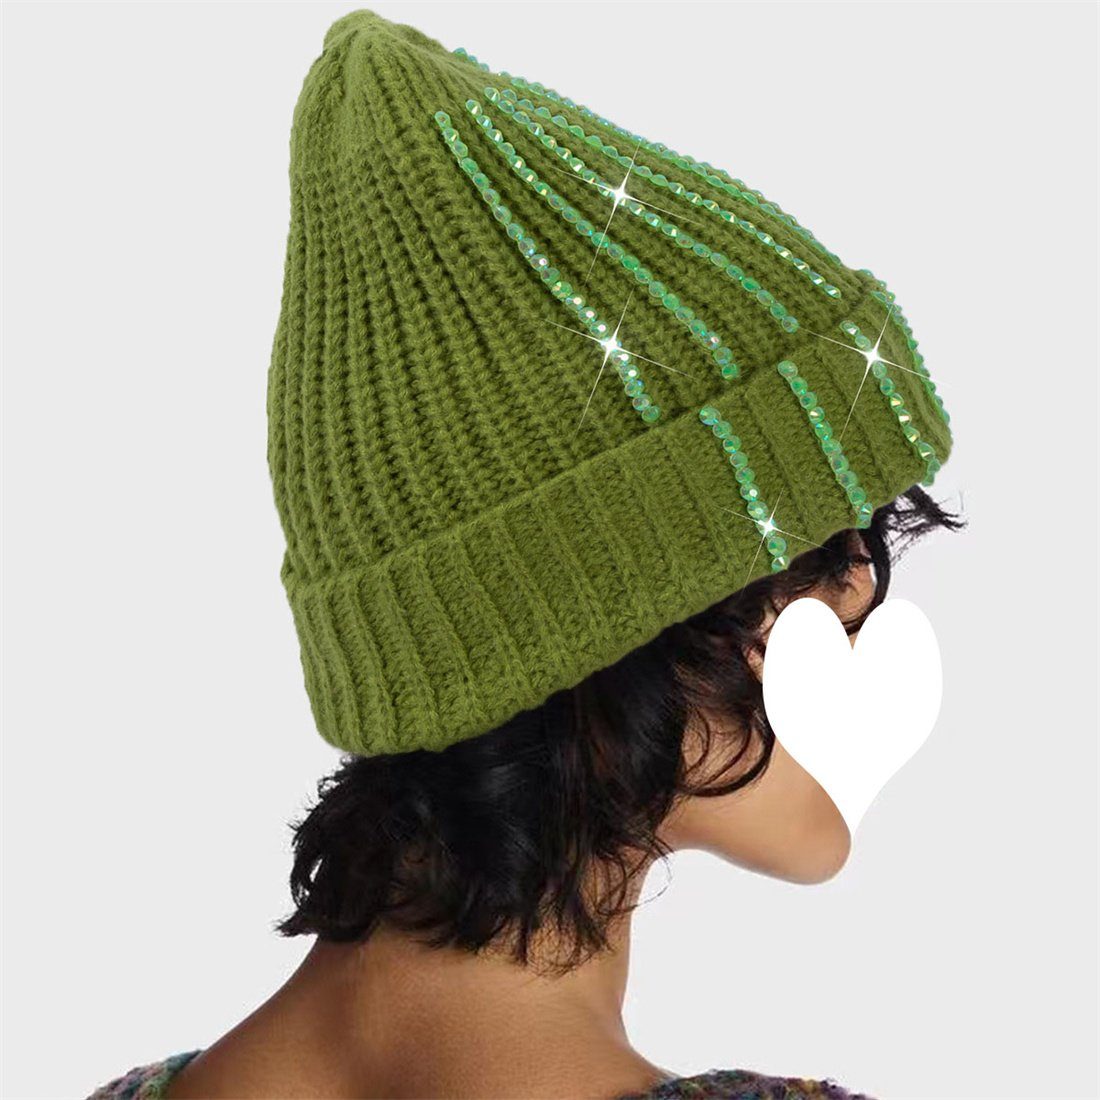 warme DÖRÖY Winter Strickmütze grün Damen warme Wollmütze Strickmütze, Outdoor-Mode verdickt